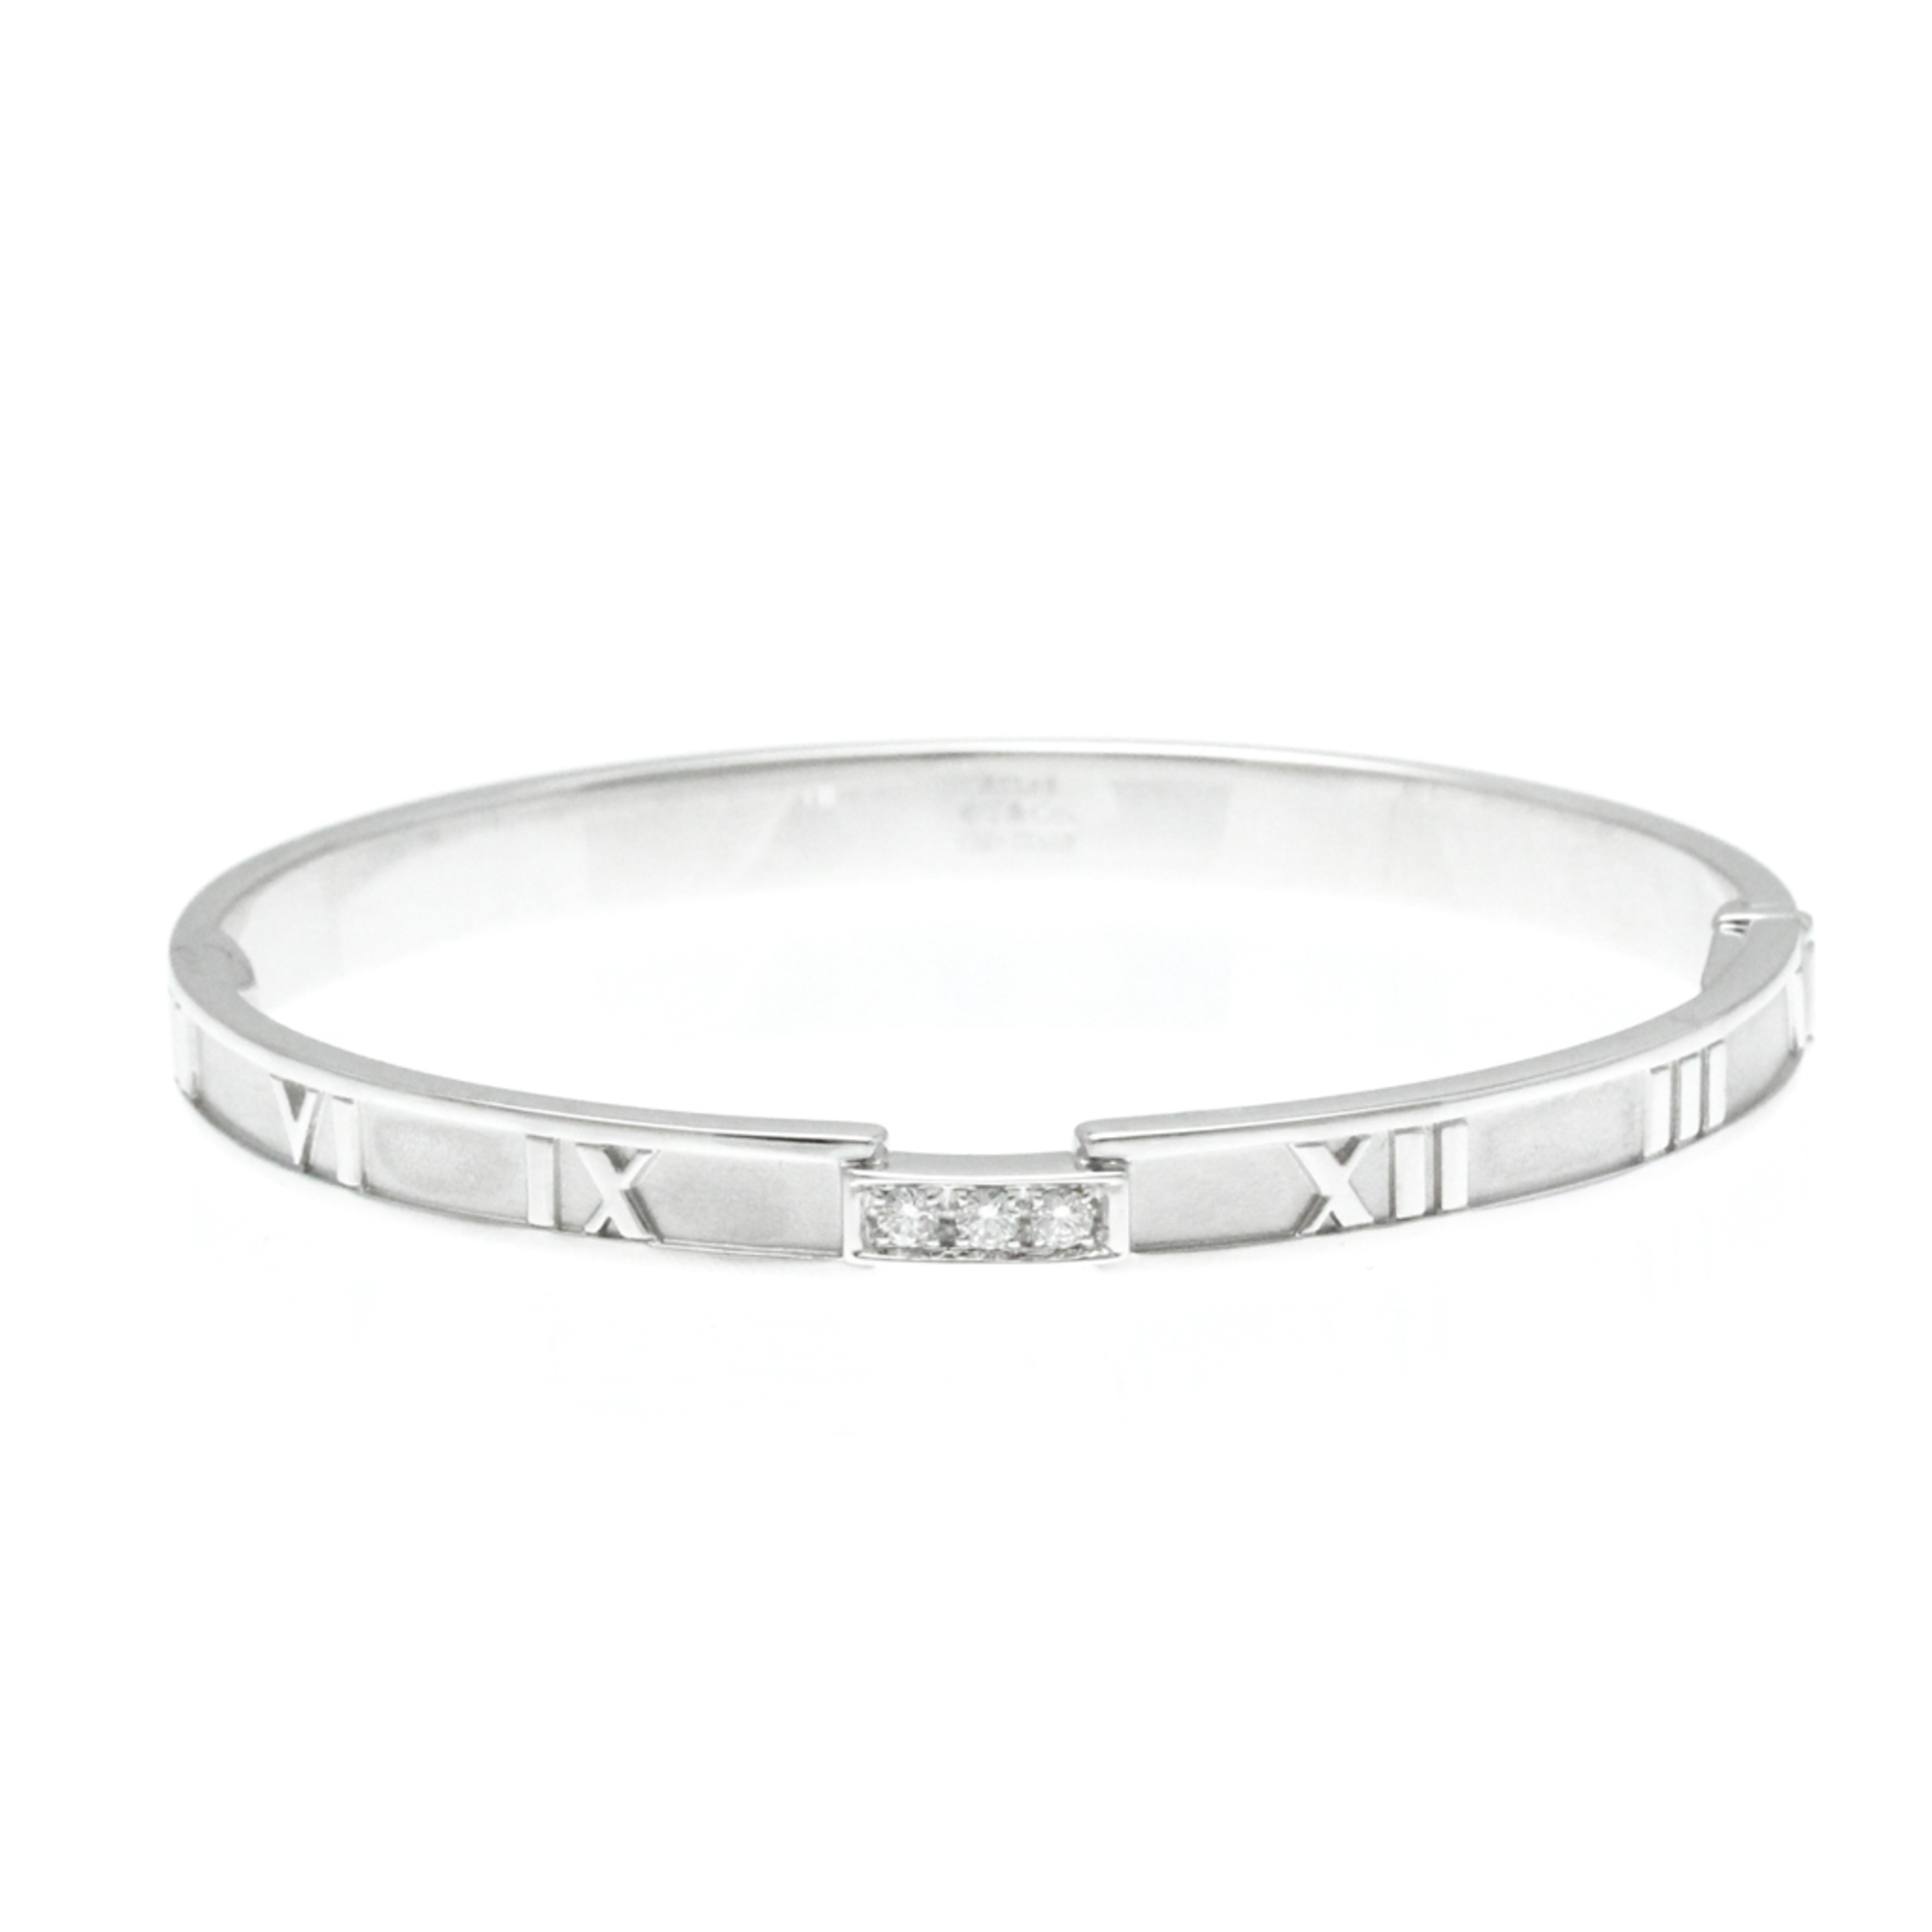 Tiffany Atlas Diamond Bracelet White Gold (18K) Diamond Charm Bracelet Silver